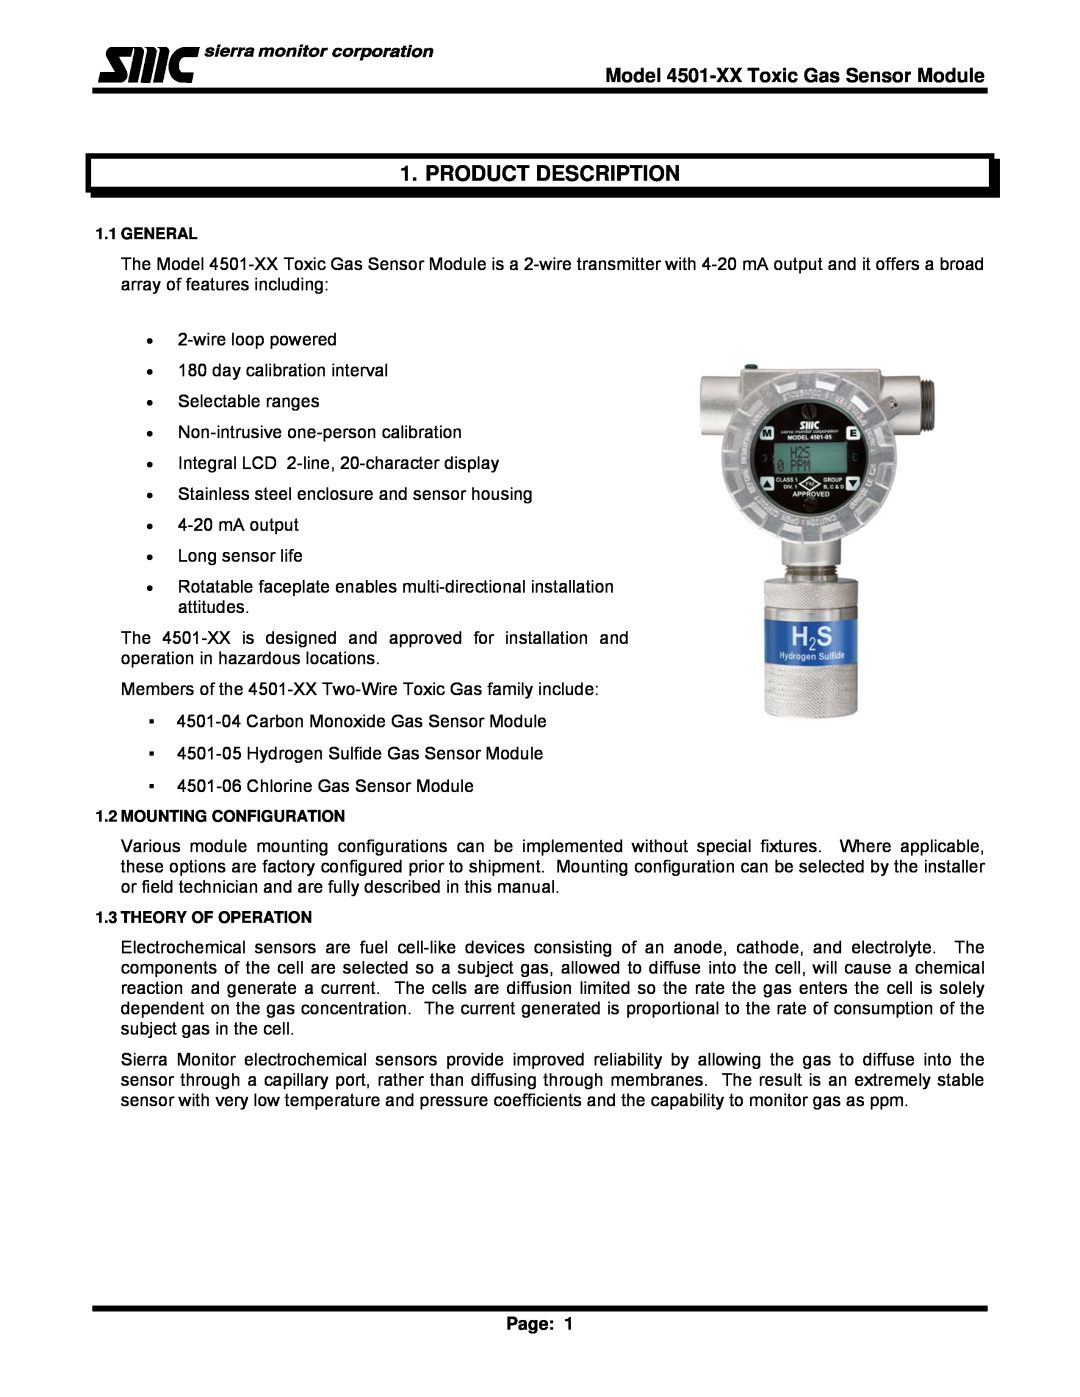 Sierra Monitor Corporation 4501-04, 4501-06, 4501-05 Product Description, Page, Model 4501-XXToxic Gas Sensor Module 